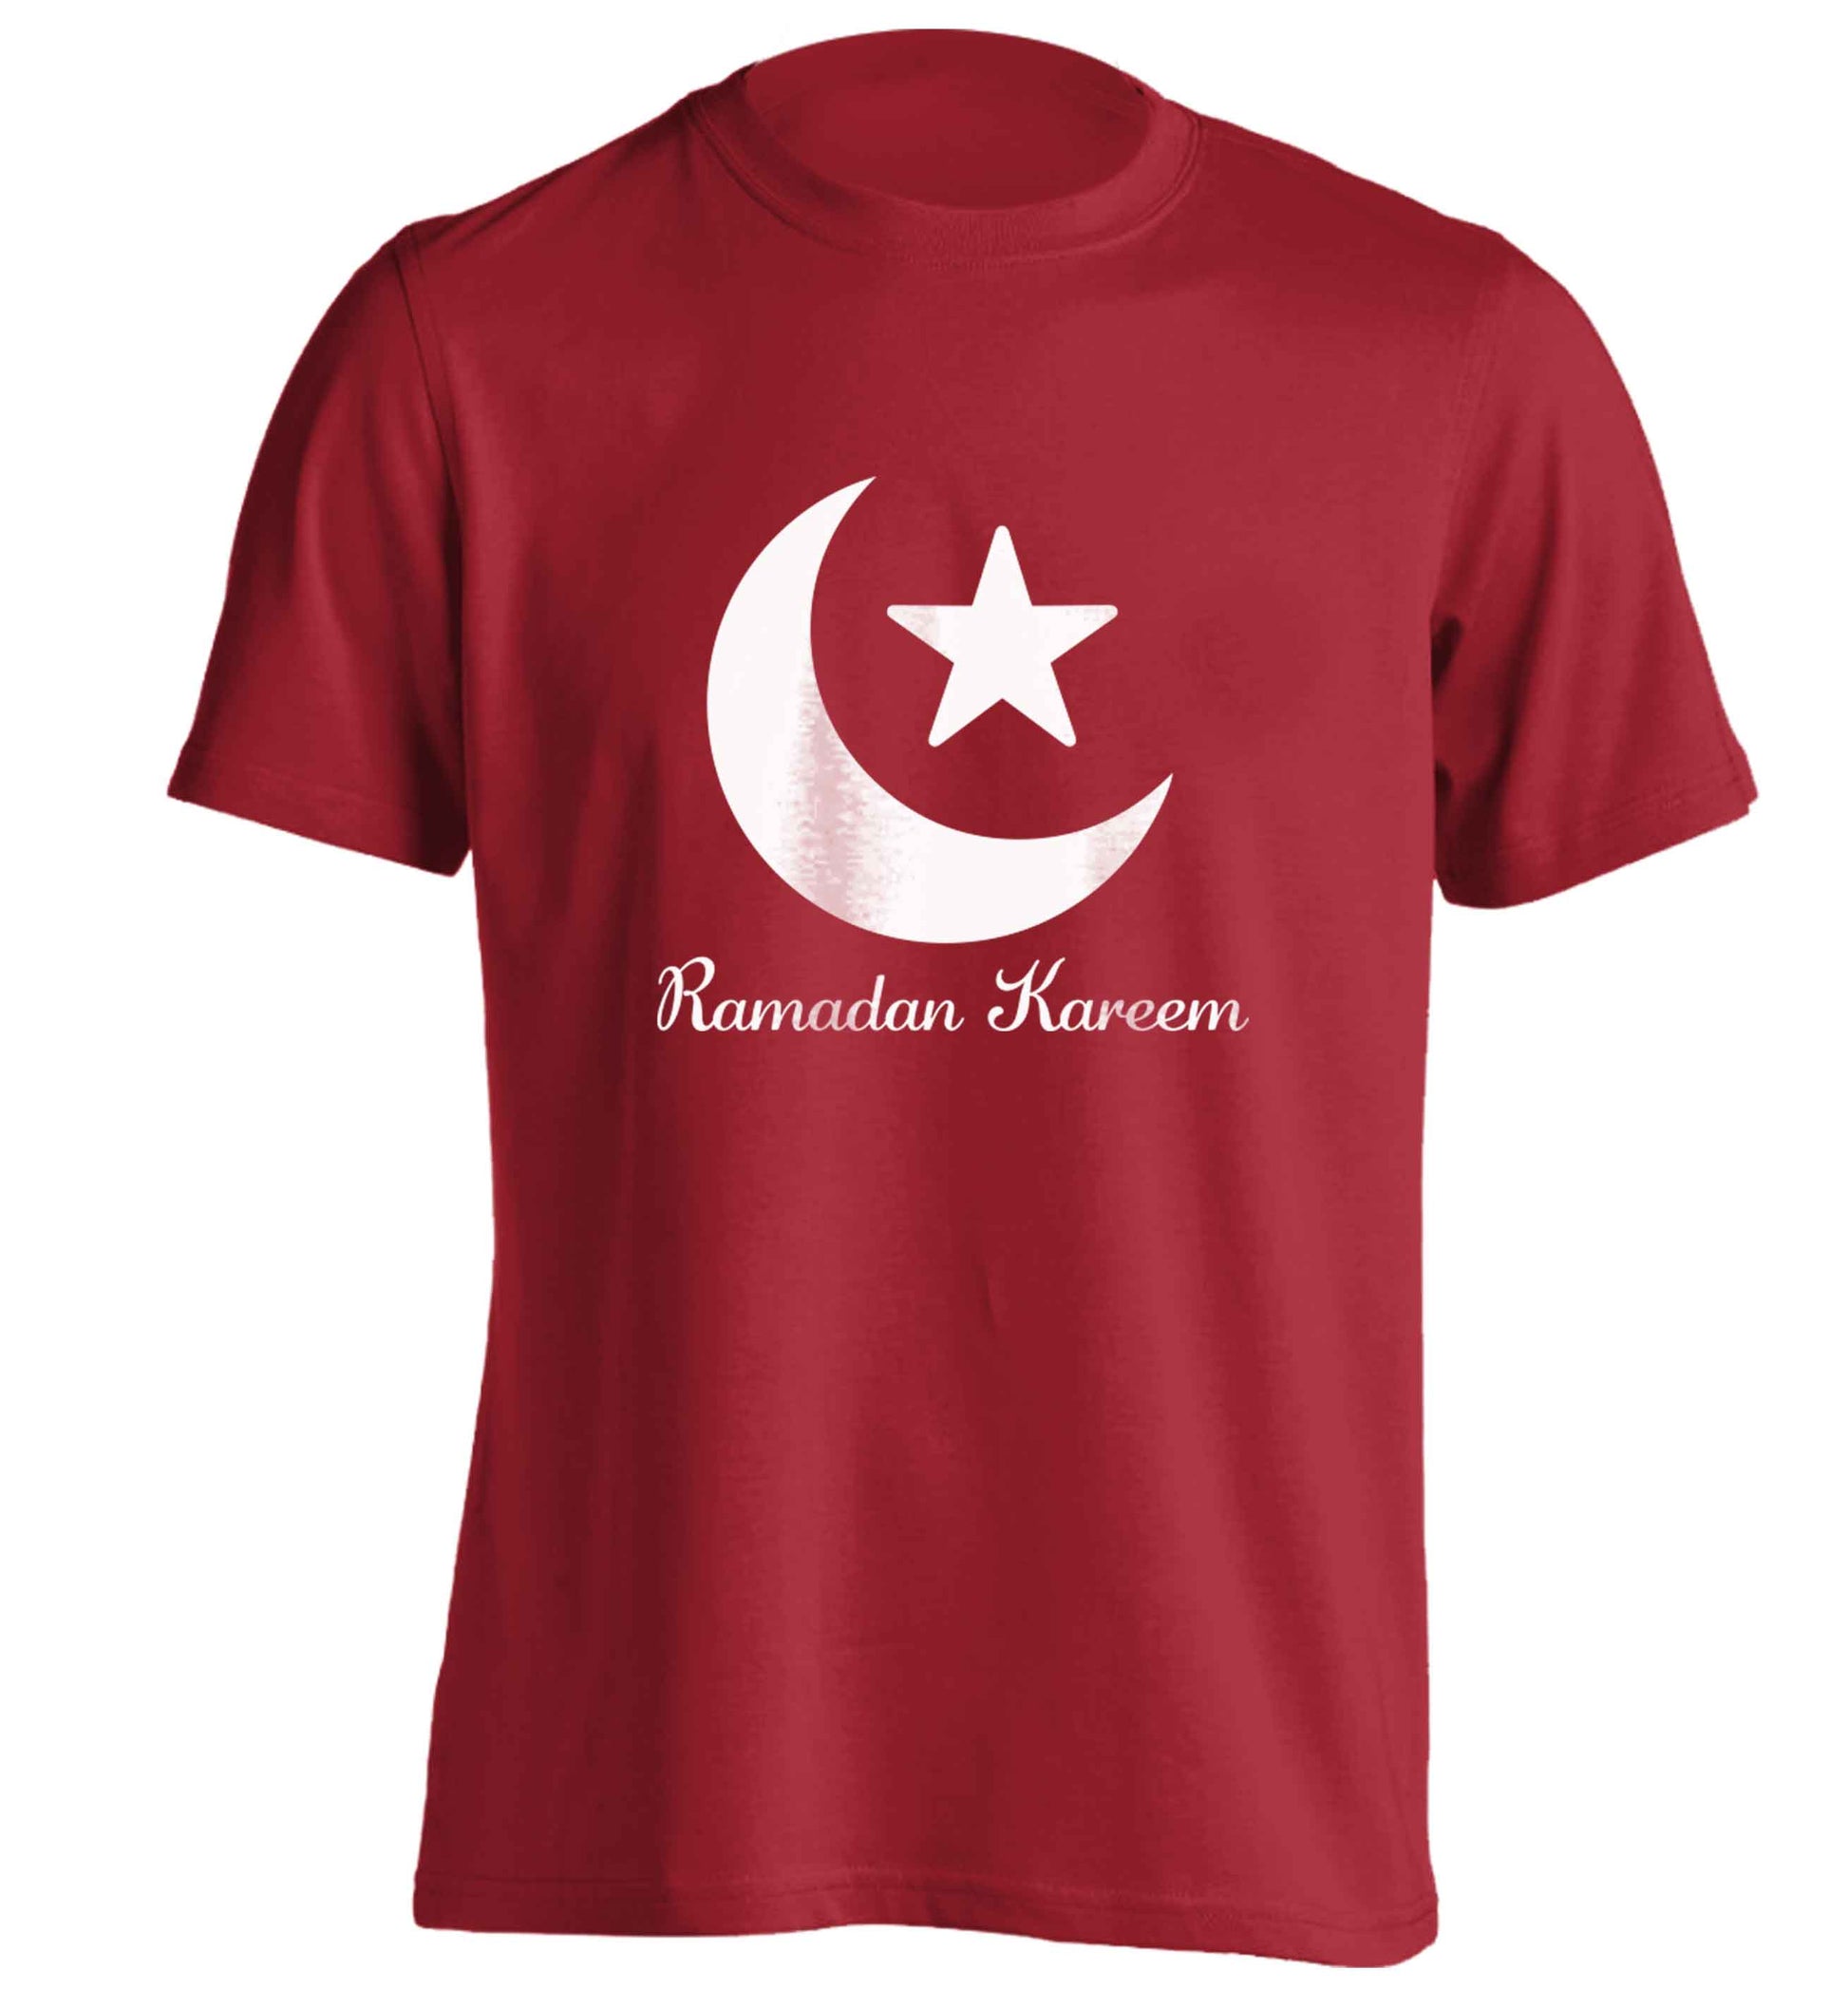 Ramadan kareem adults unisex red Tshirt 2XL